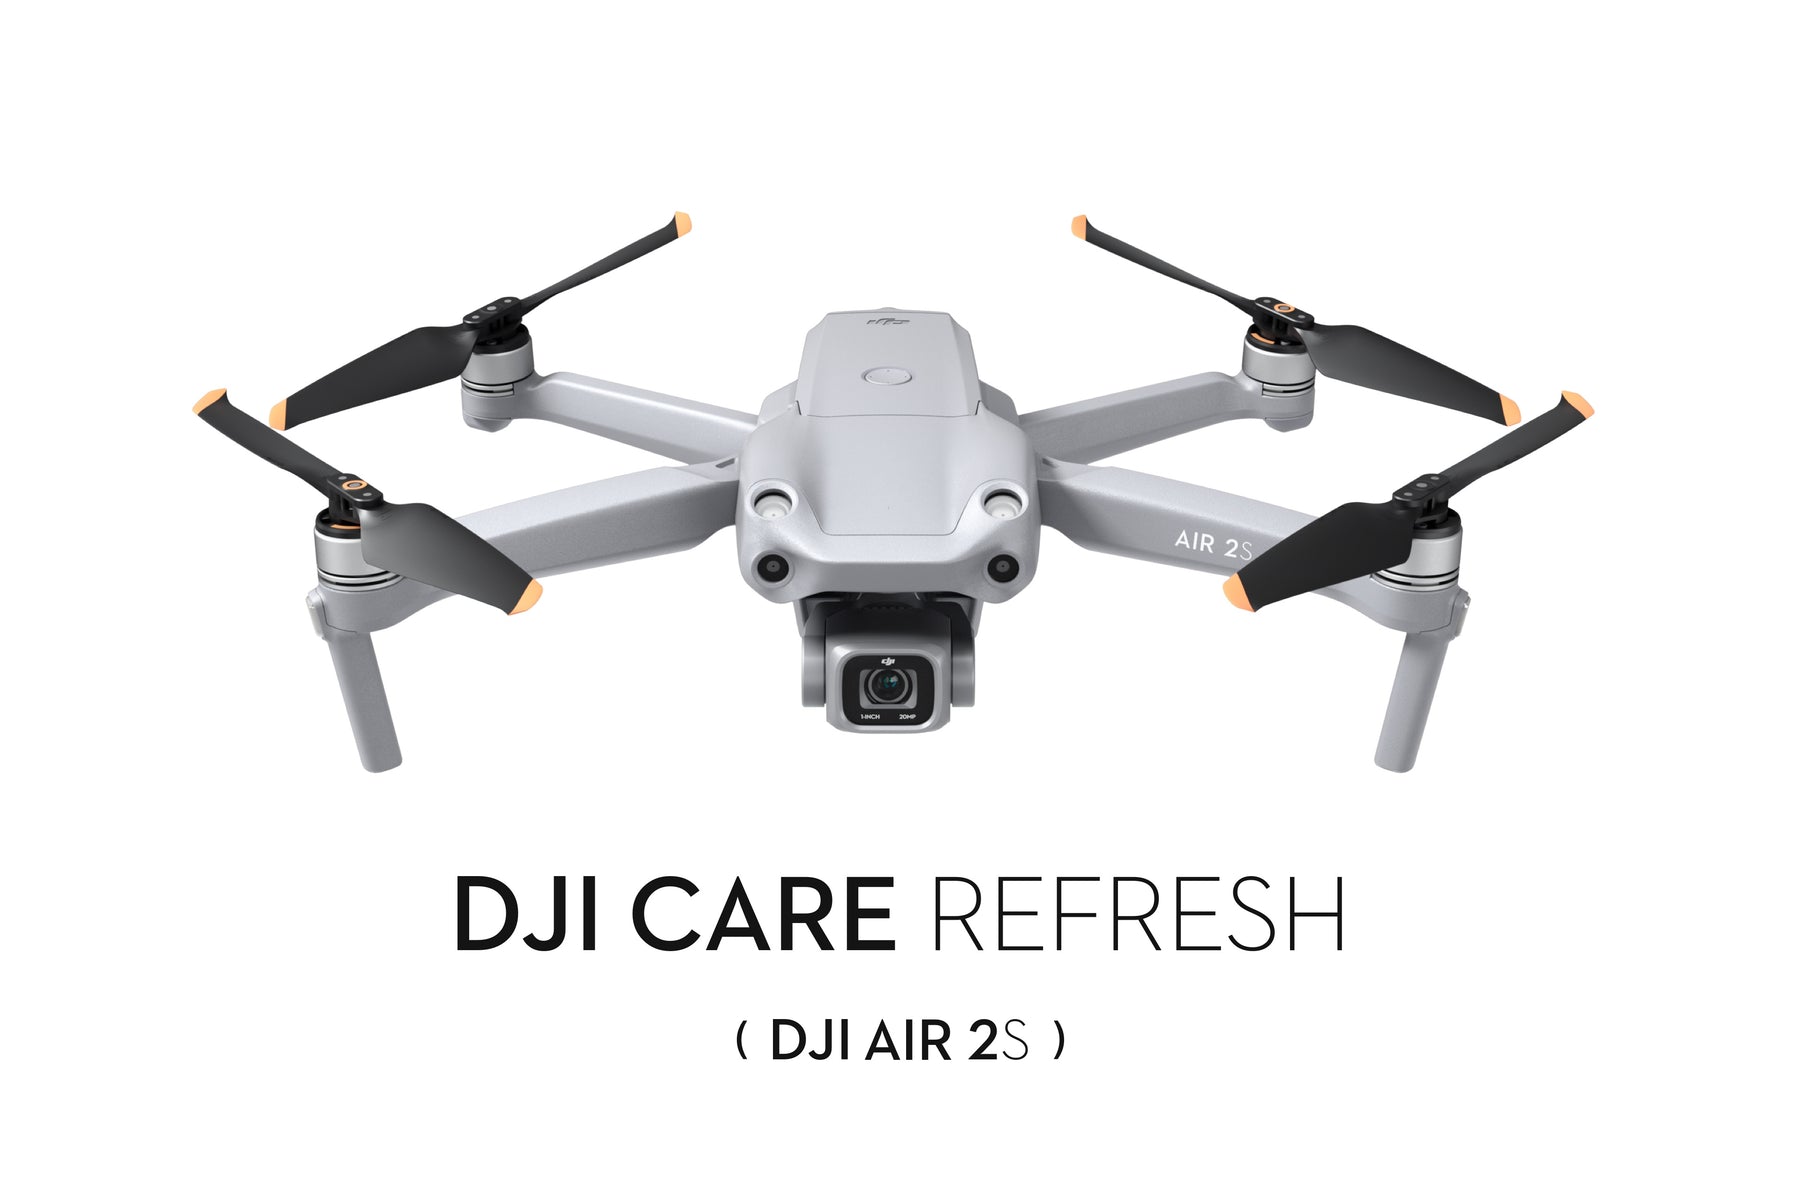 DJI Care Refresh 2-Year Plan (DJI Air 2S)